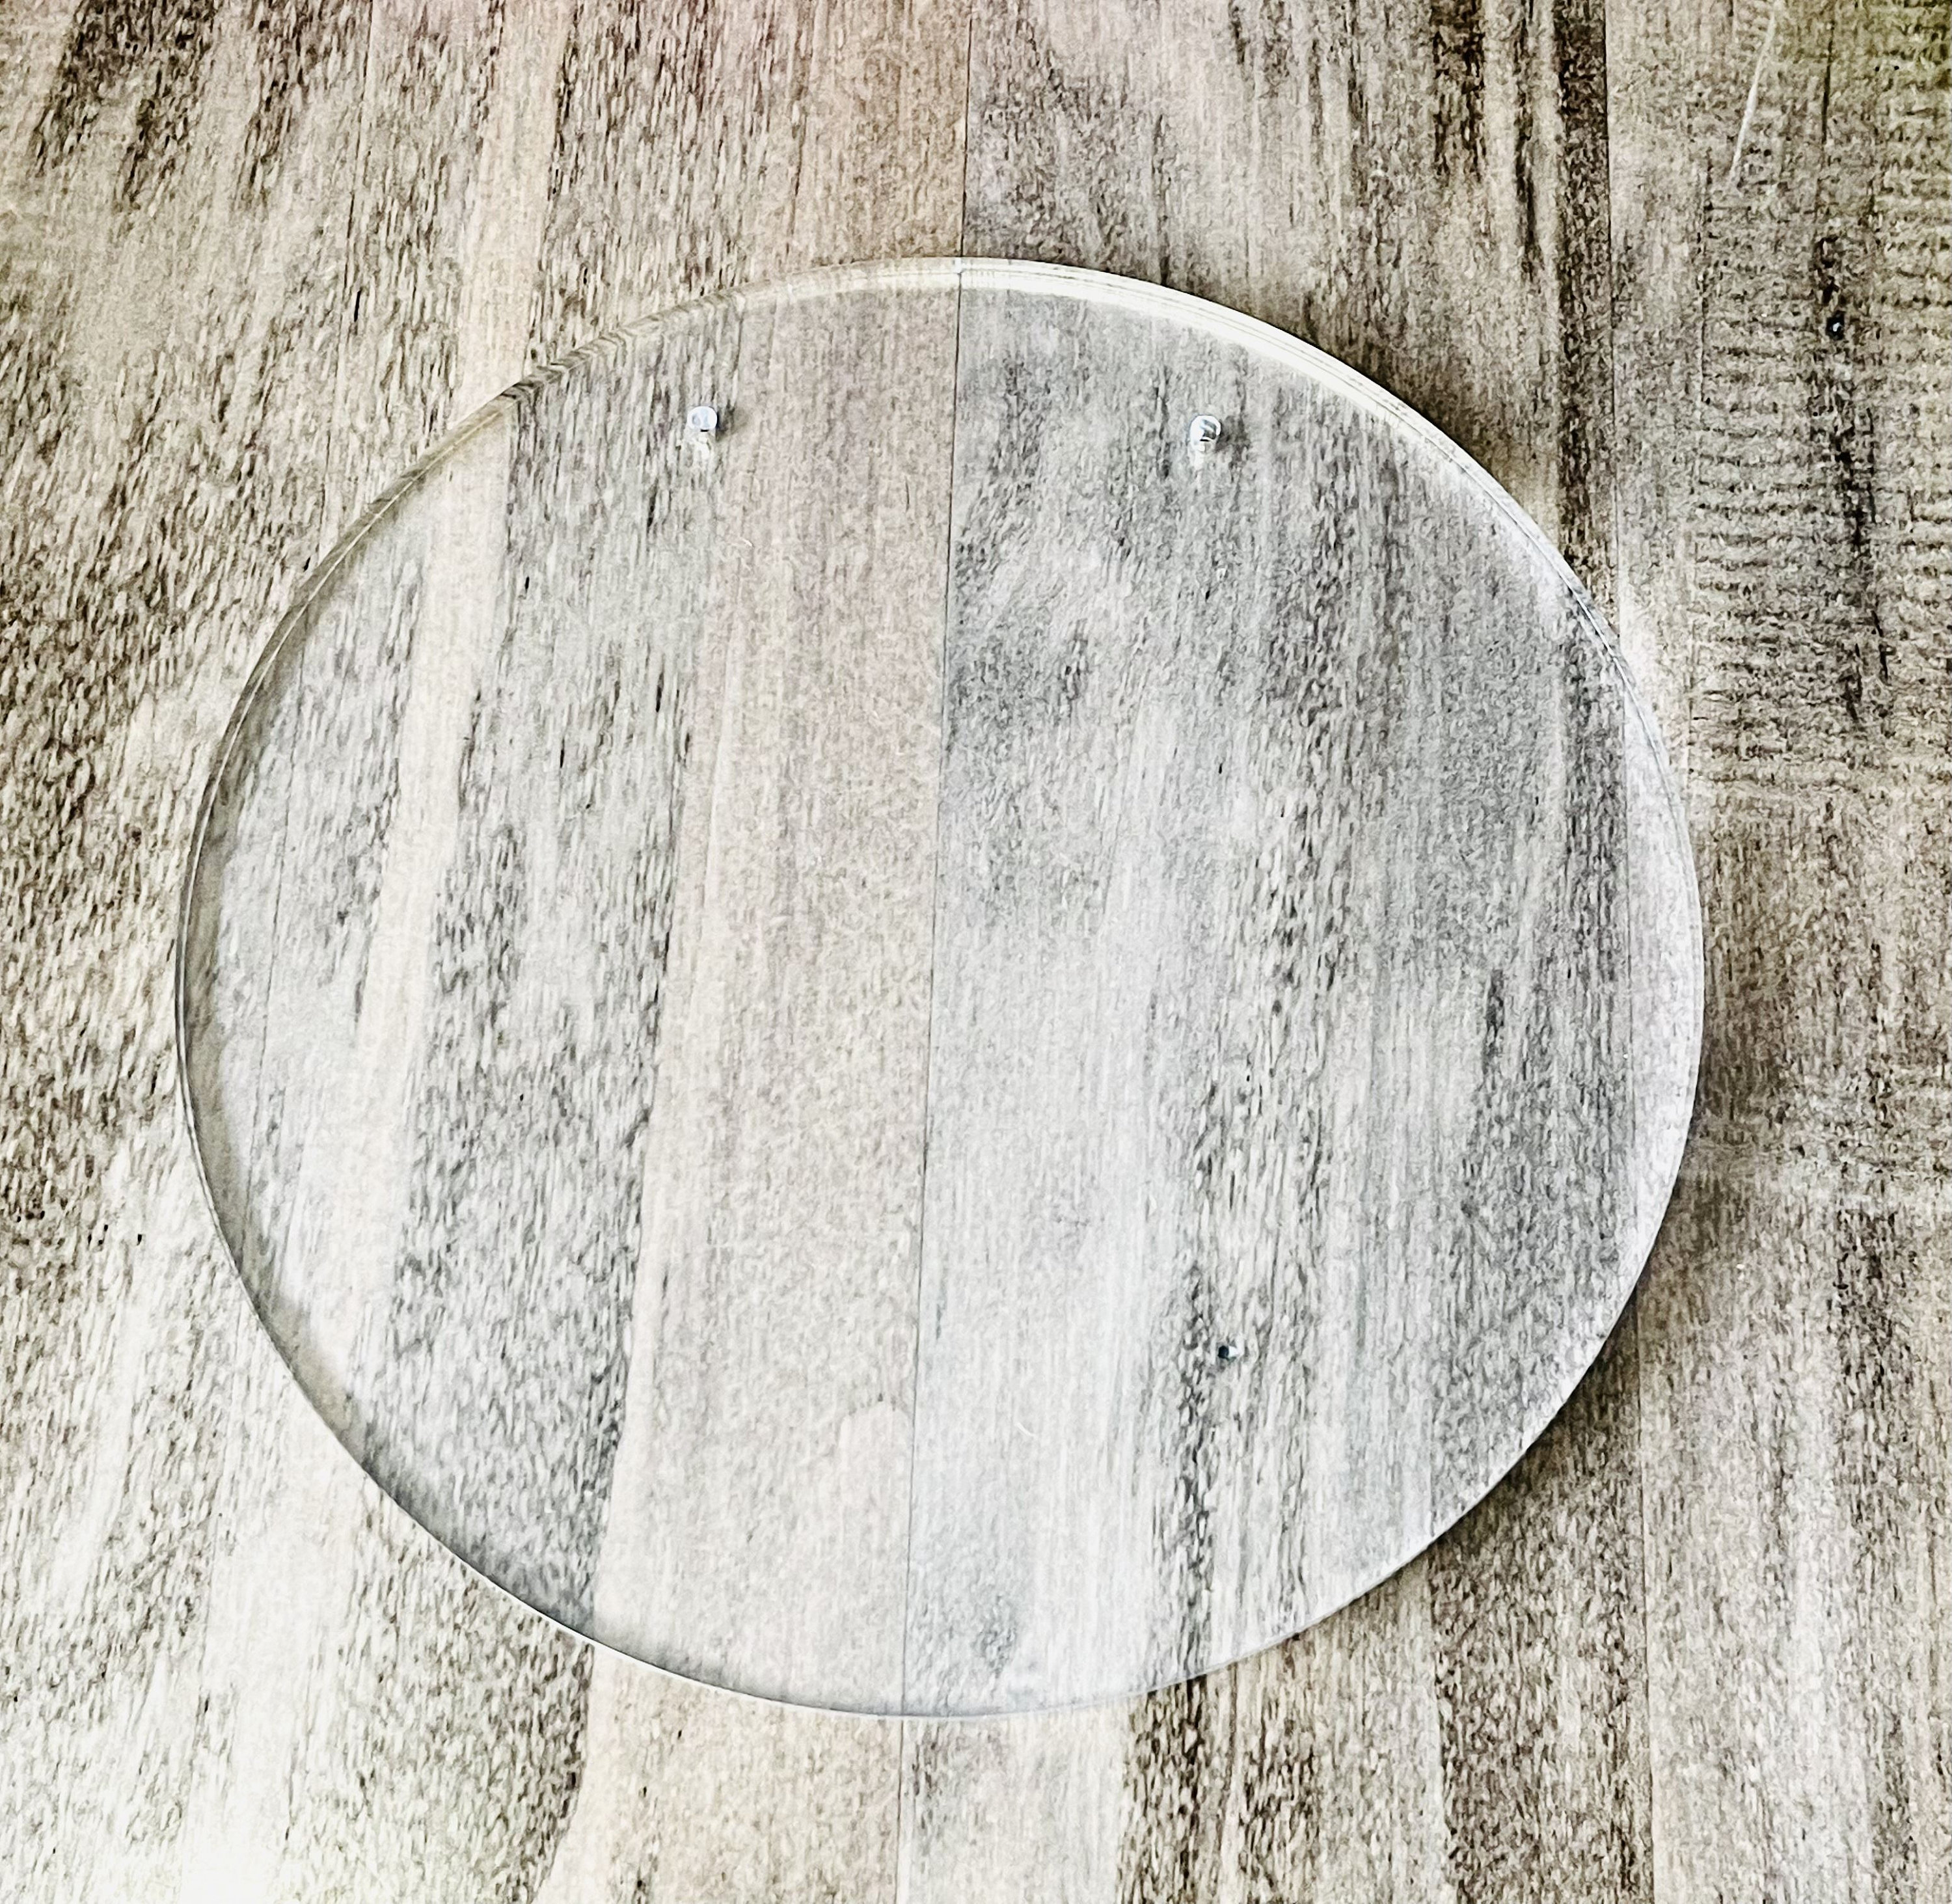 30 Laser Cut White Acrylic Blank Round Discs Smooth Edge